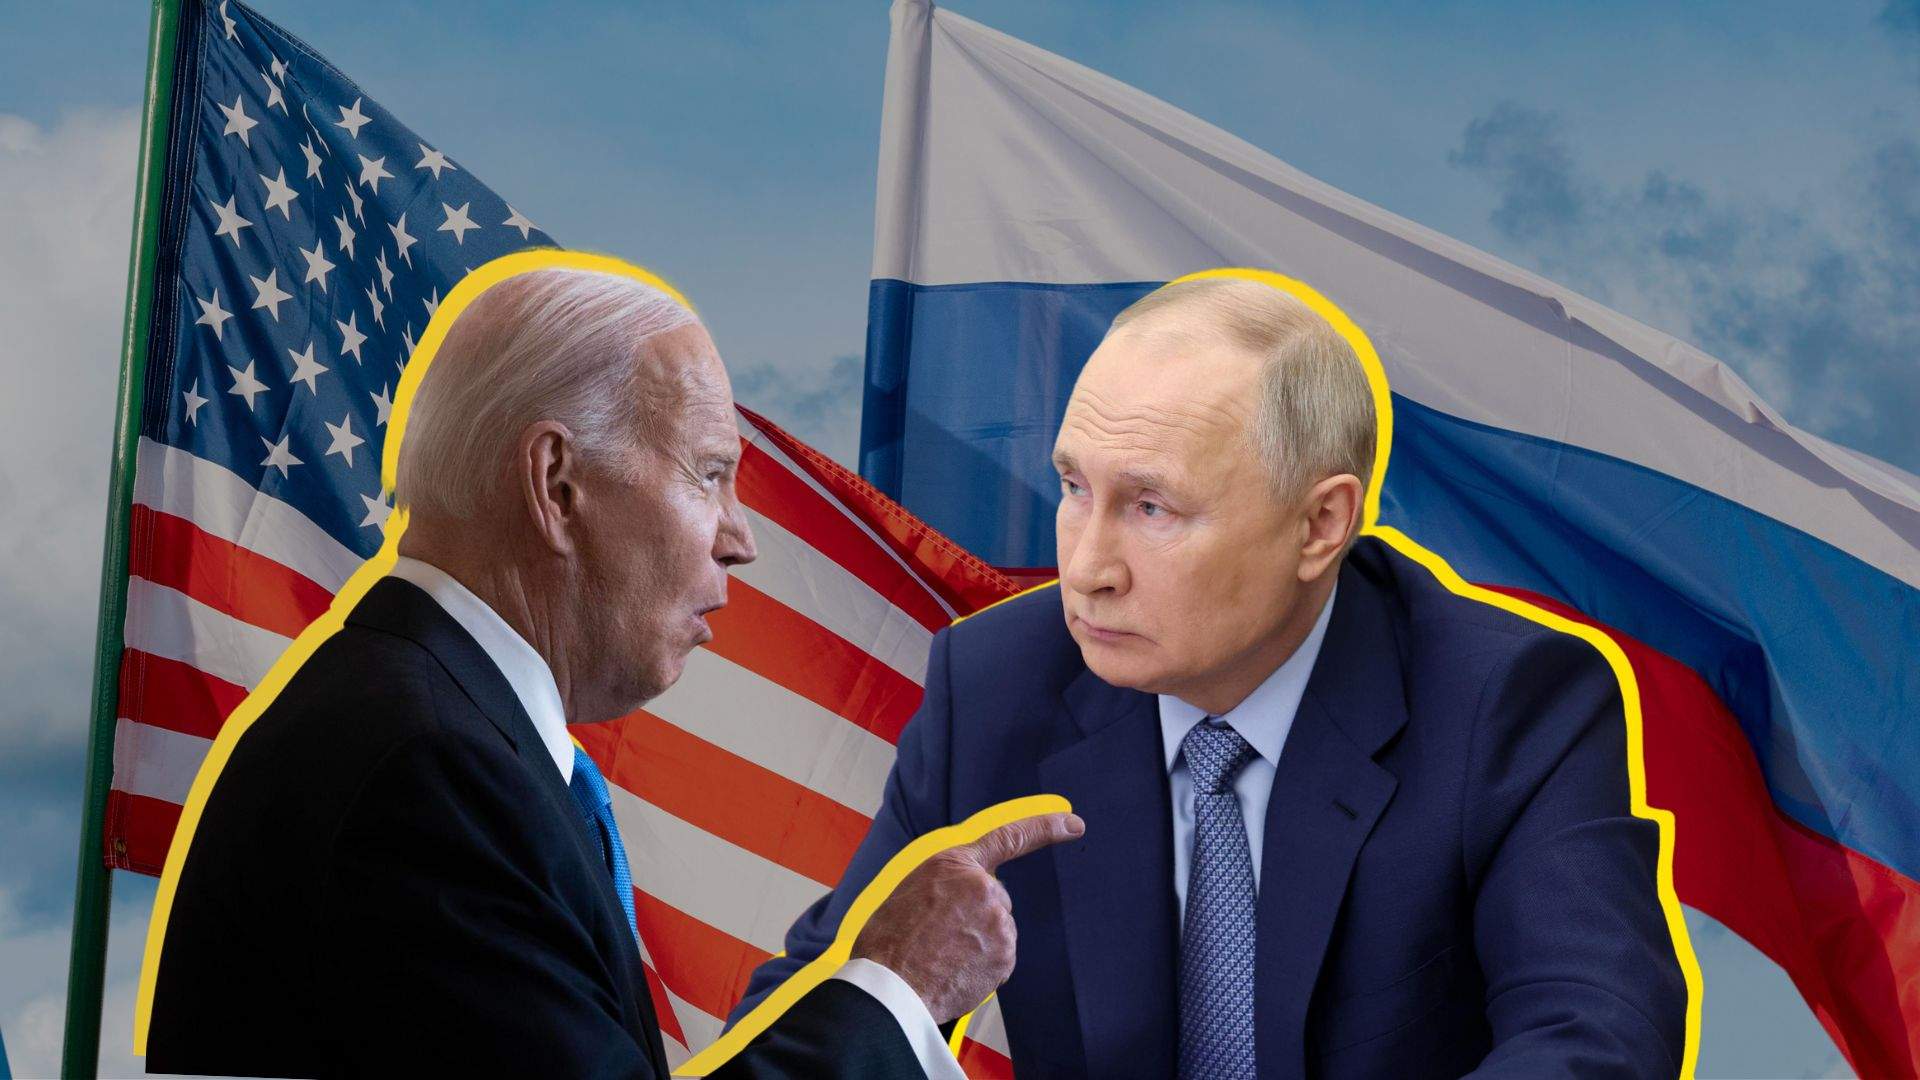 Biden ya advirtió a Putin de qué pasaría si Navalni moría: "Consecuencias devastadoras"